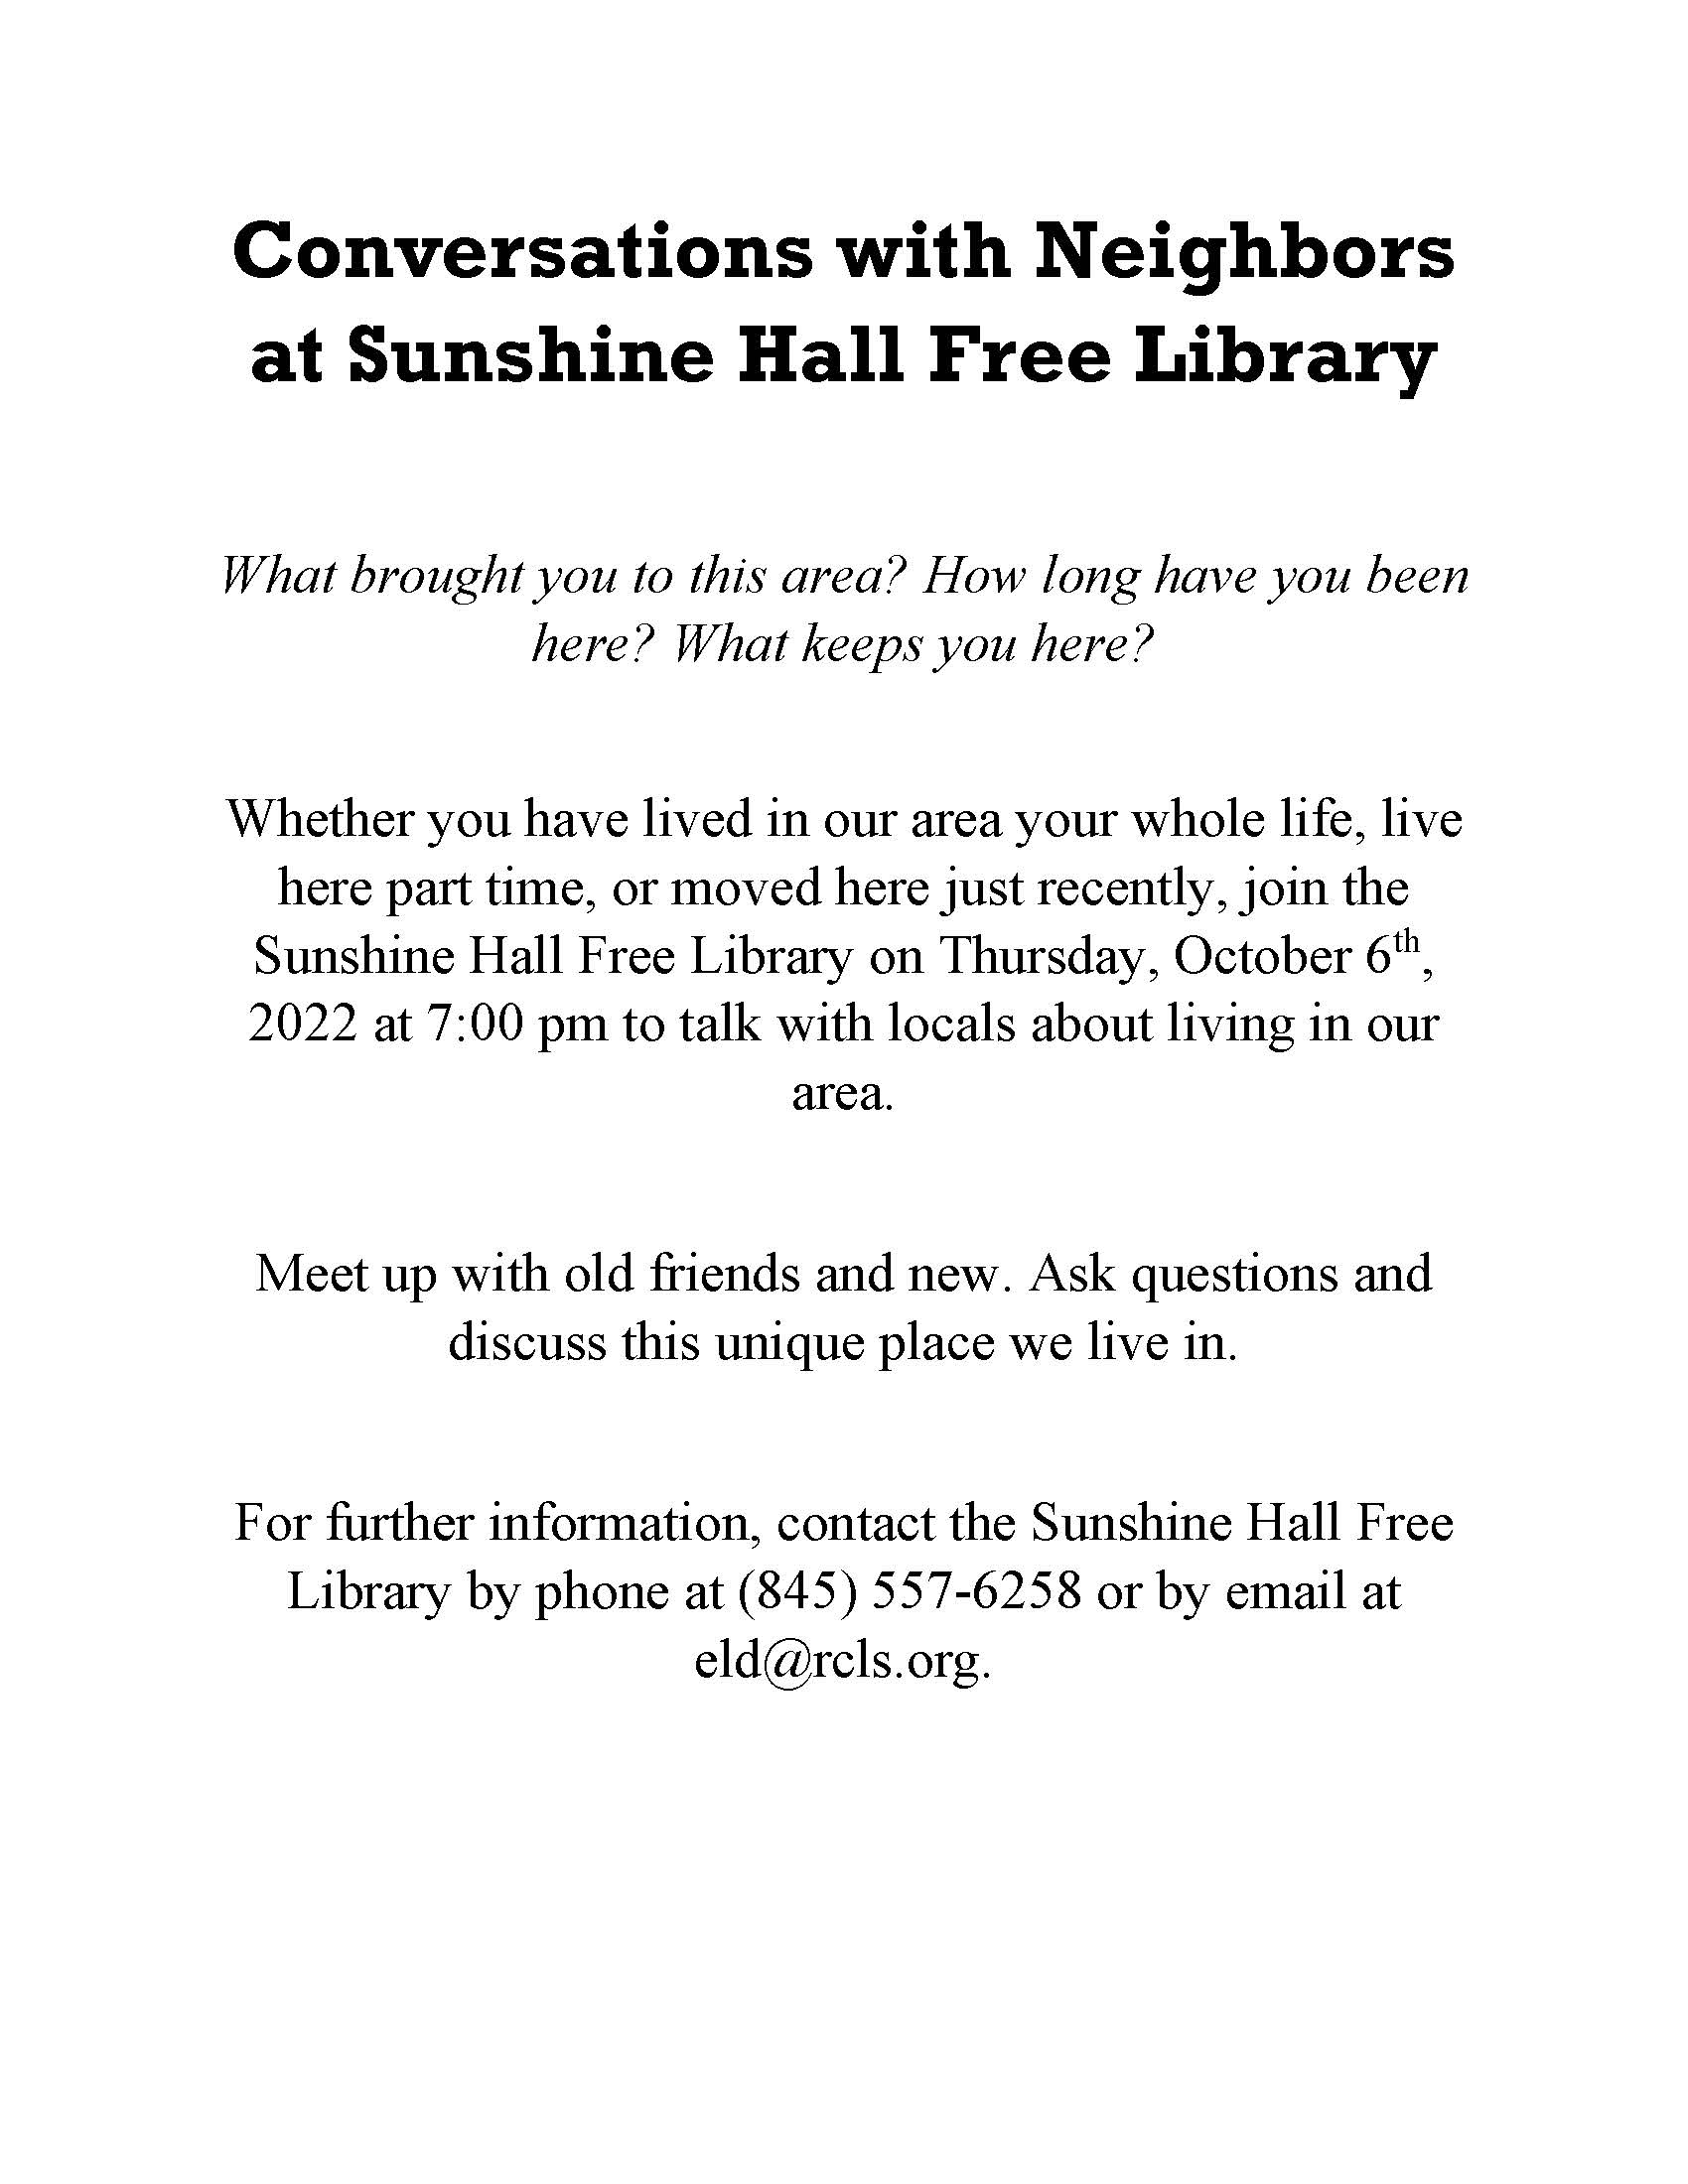 Sunshine Hall Free Library - Conversations with Neighbors